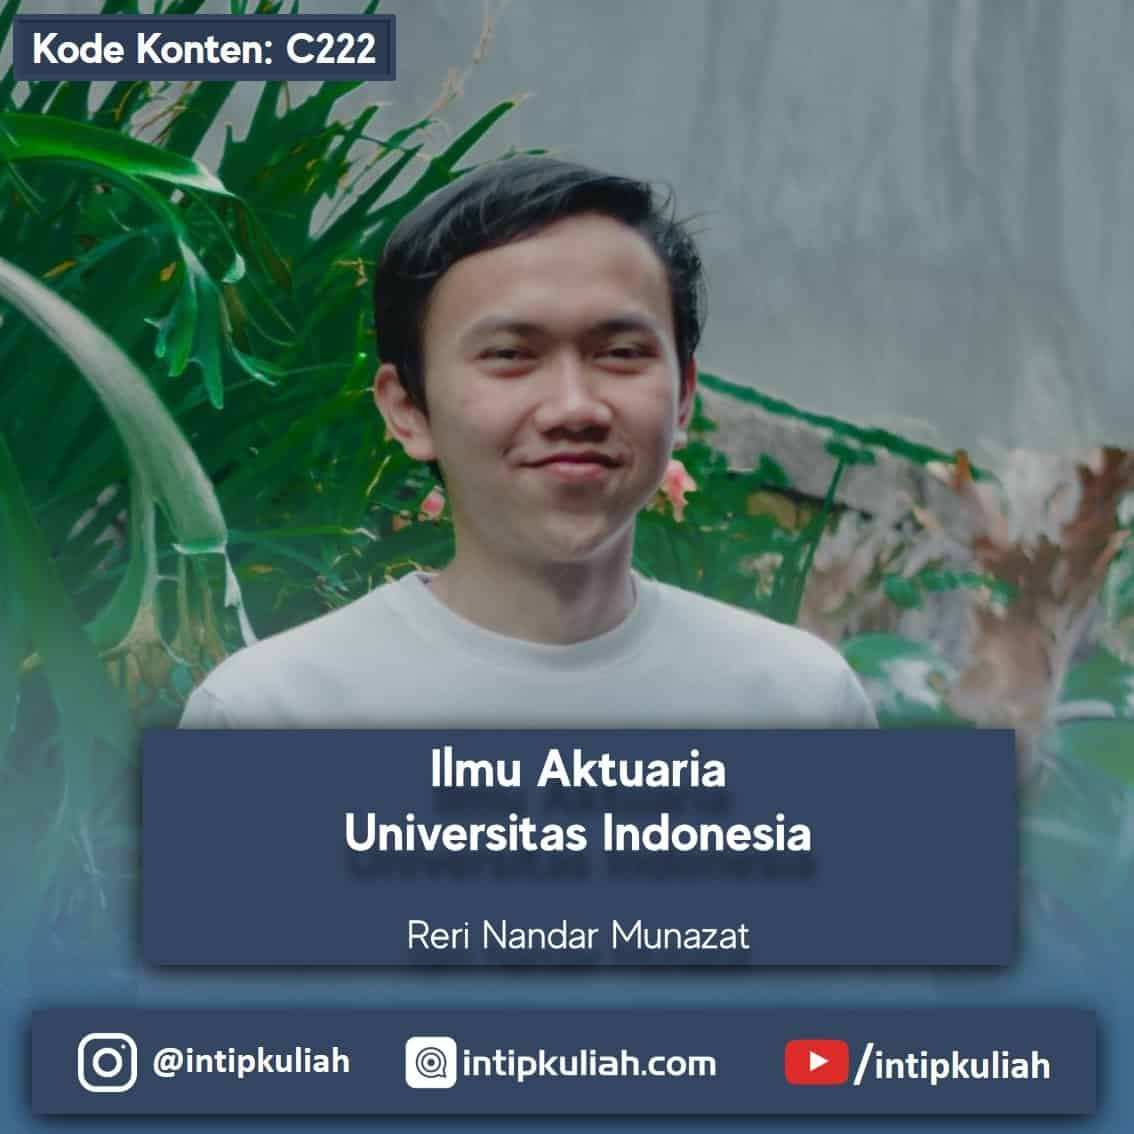 Ilmu Aktuaria Universitas Indonesia (Reri)